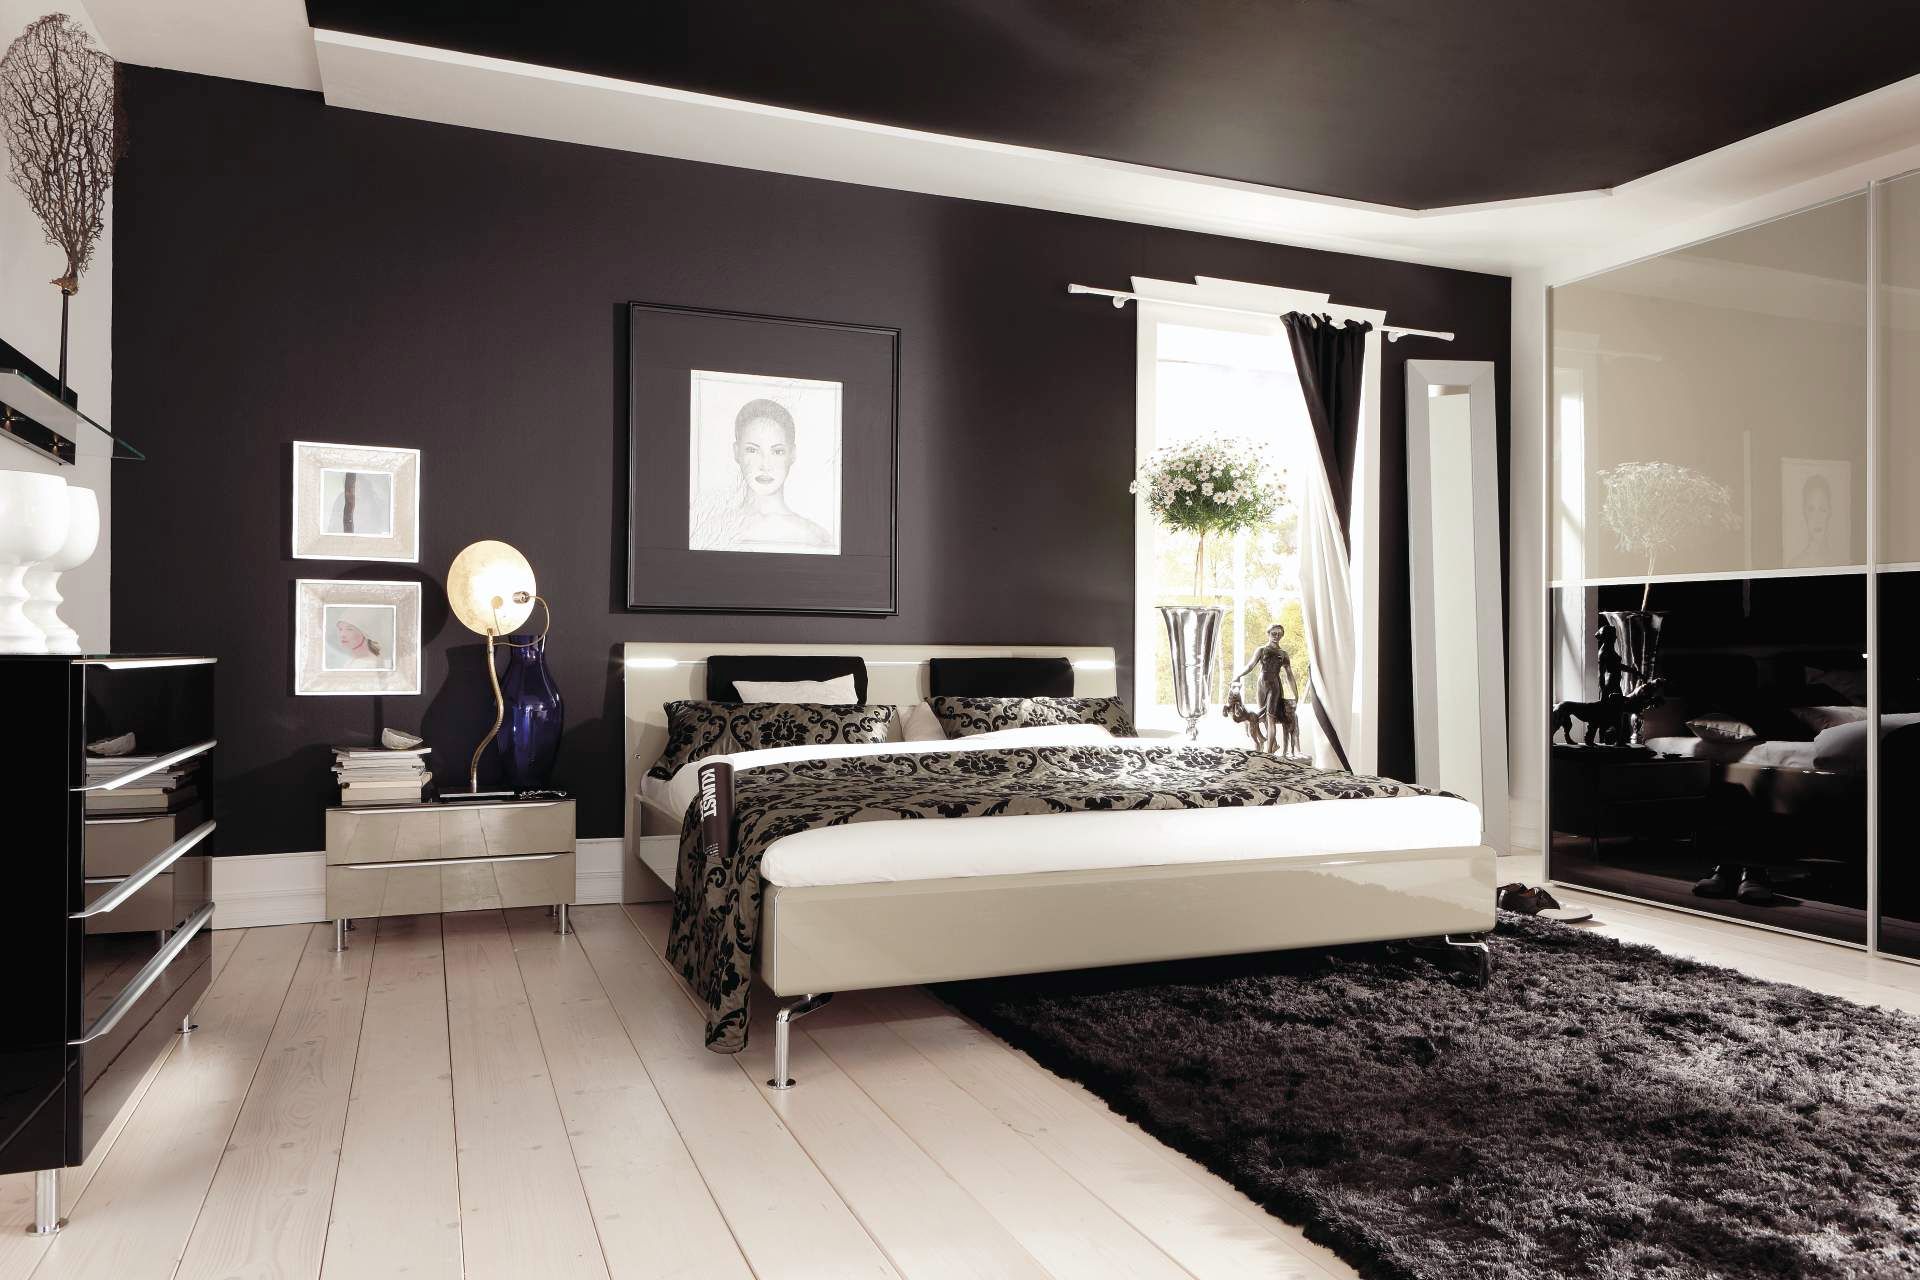 Dazzling Bedroom Queen Size Bed Dimensions Ideas